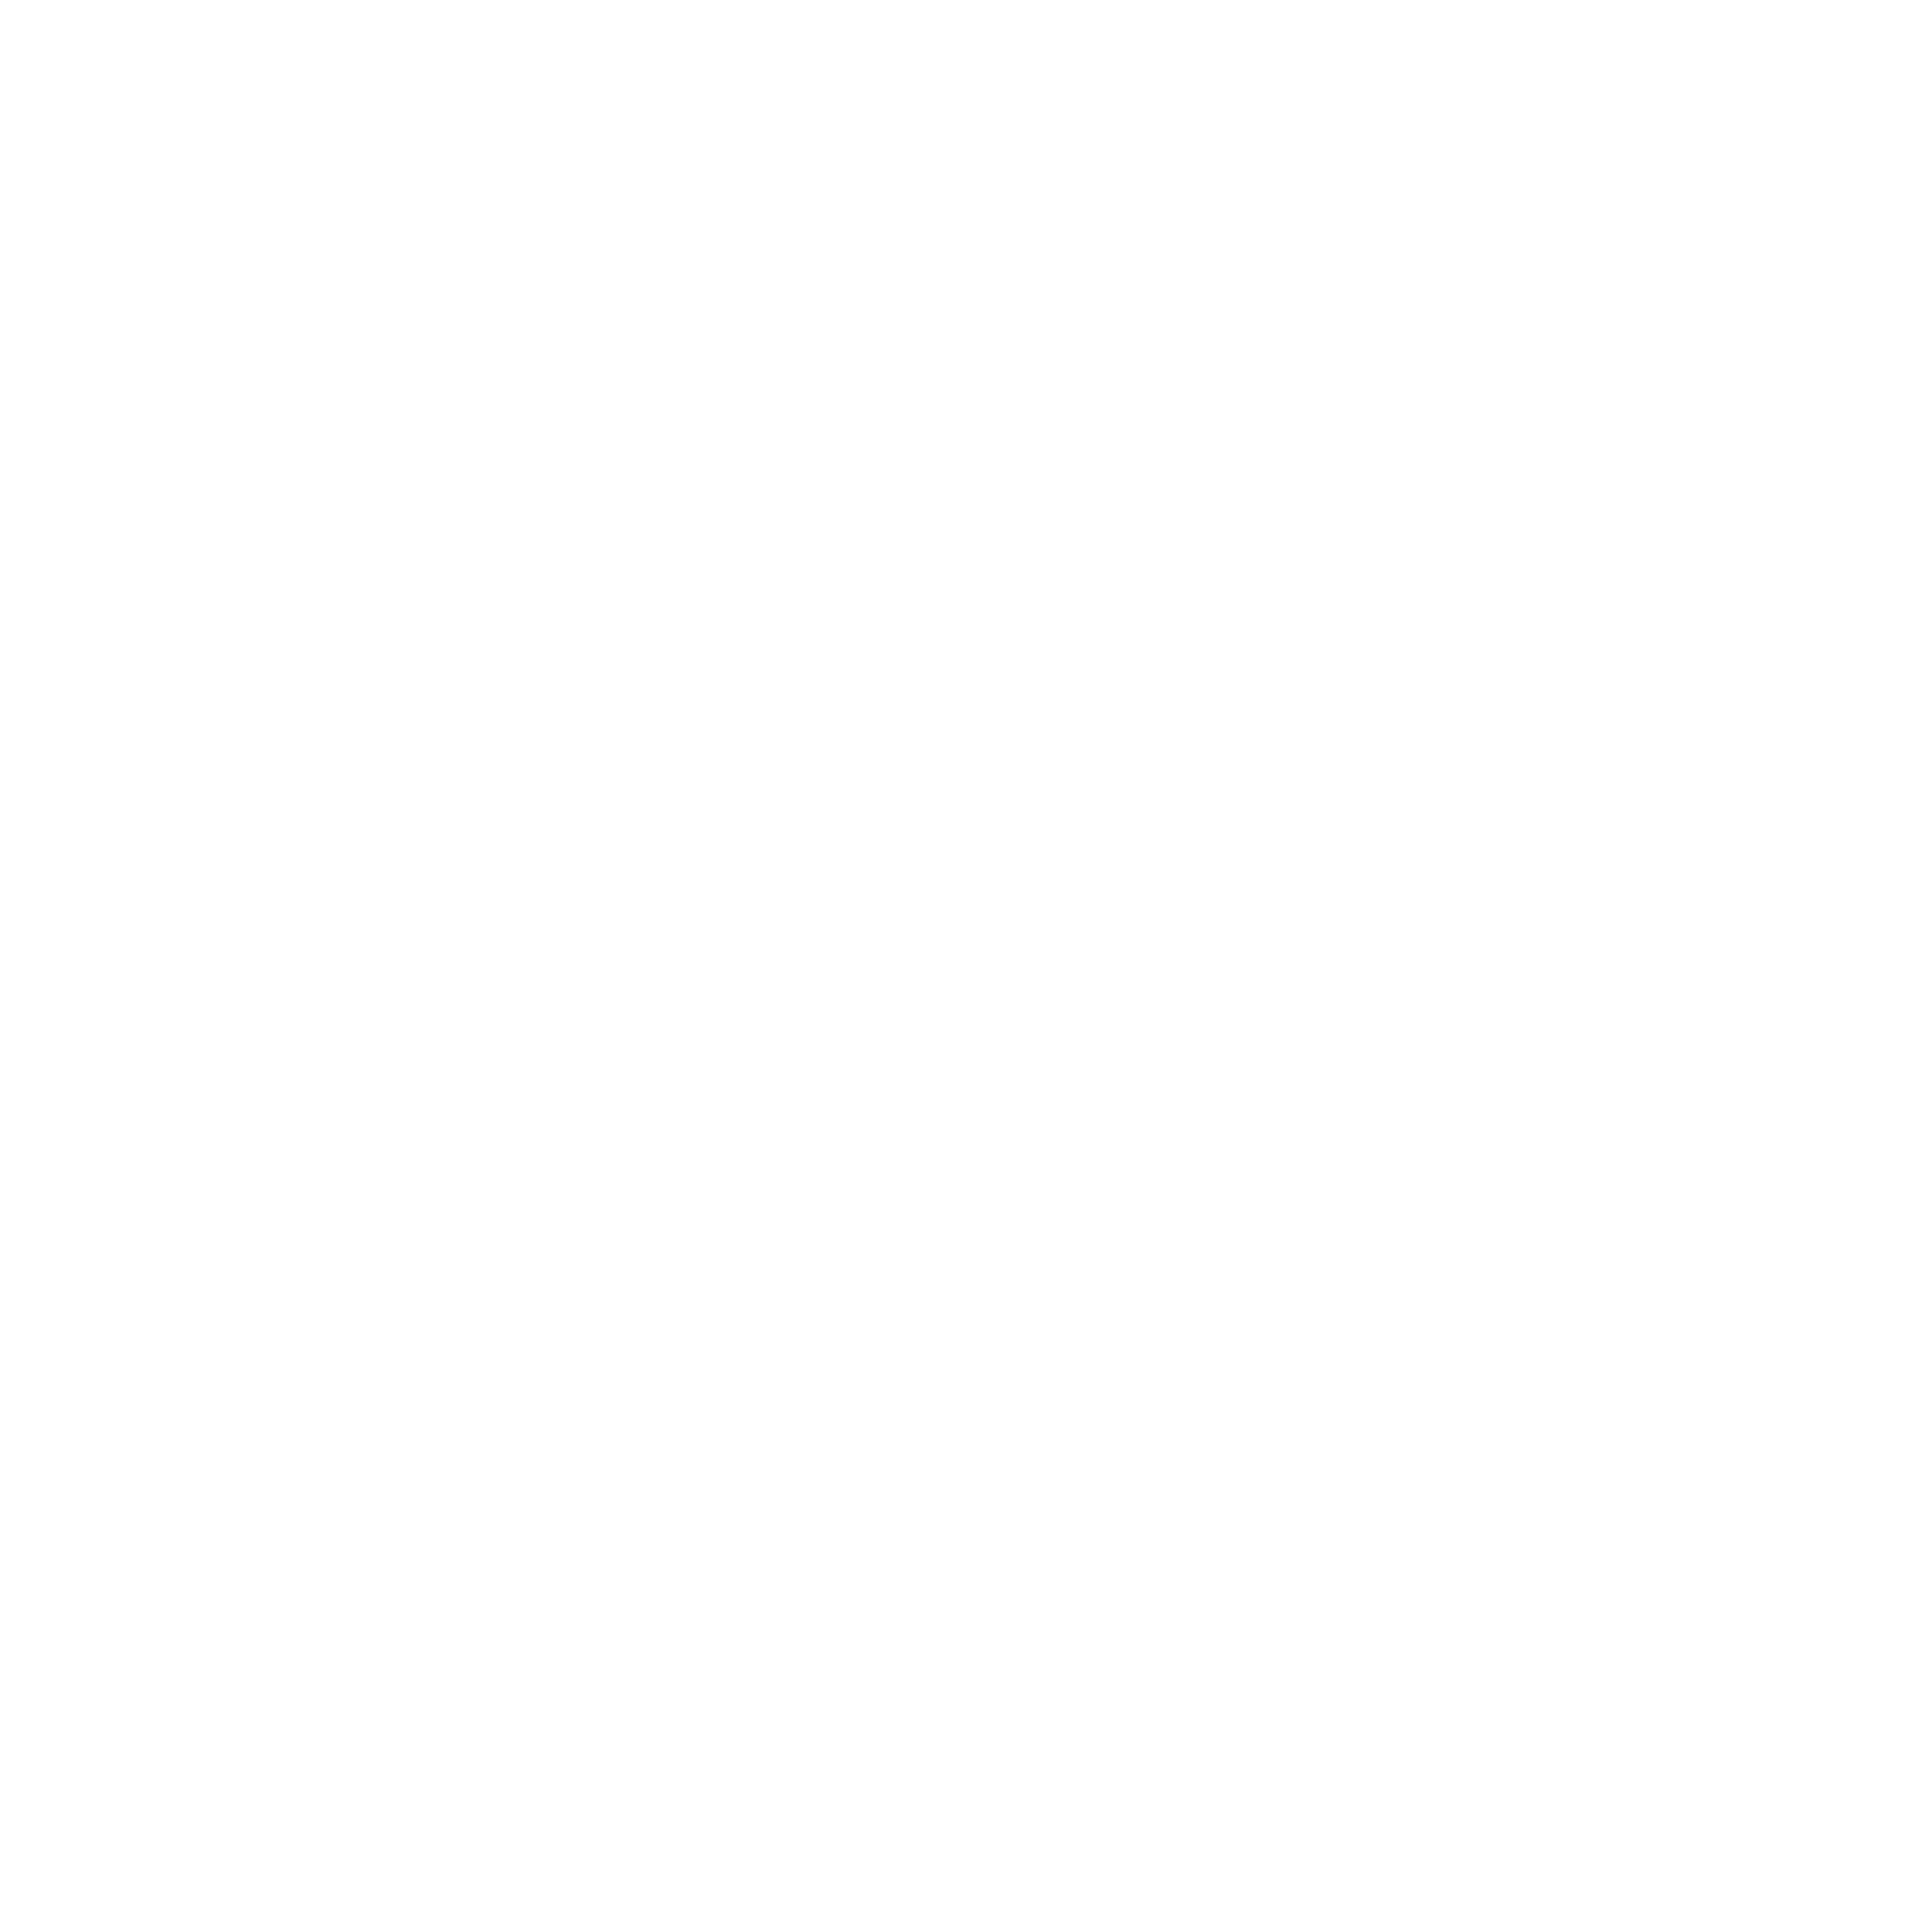 Tempstar Logo - Tempstar Logo PNG Transparent & SVG Vector - Freebie Supply